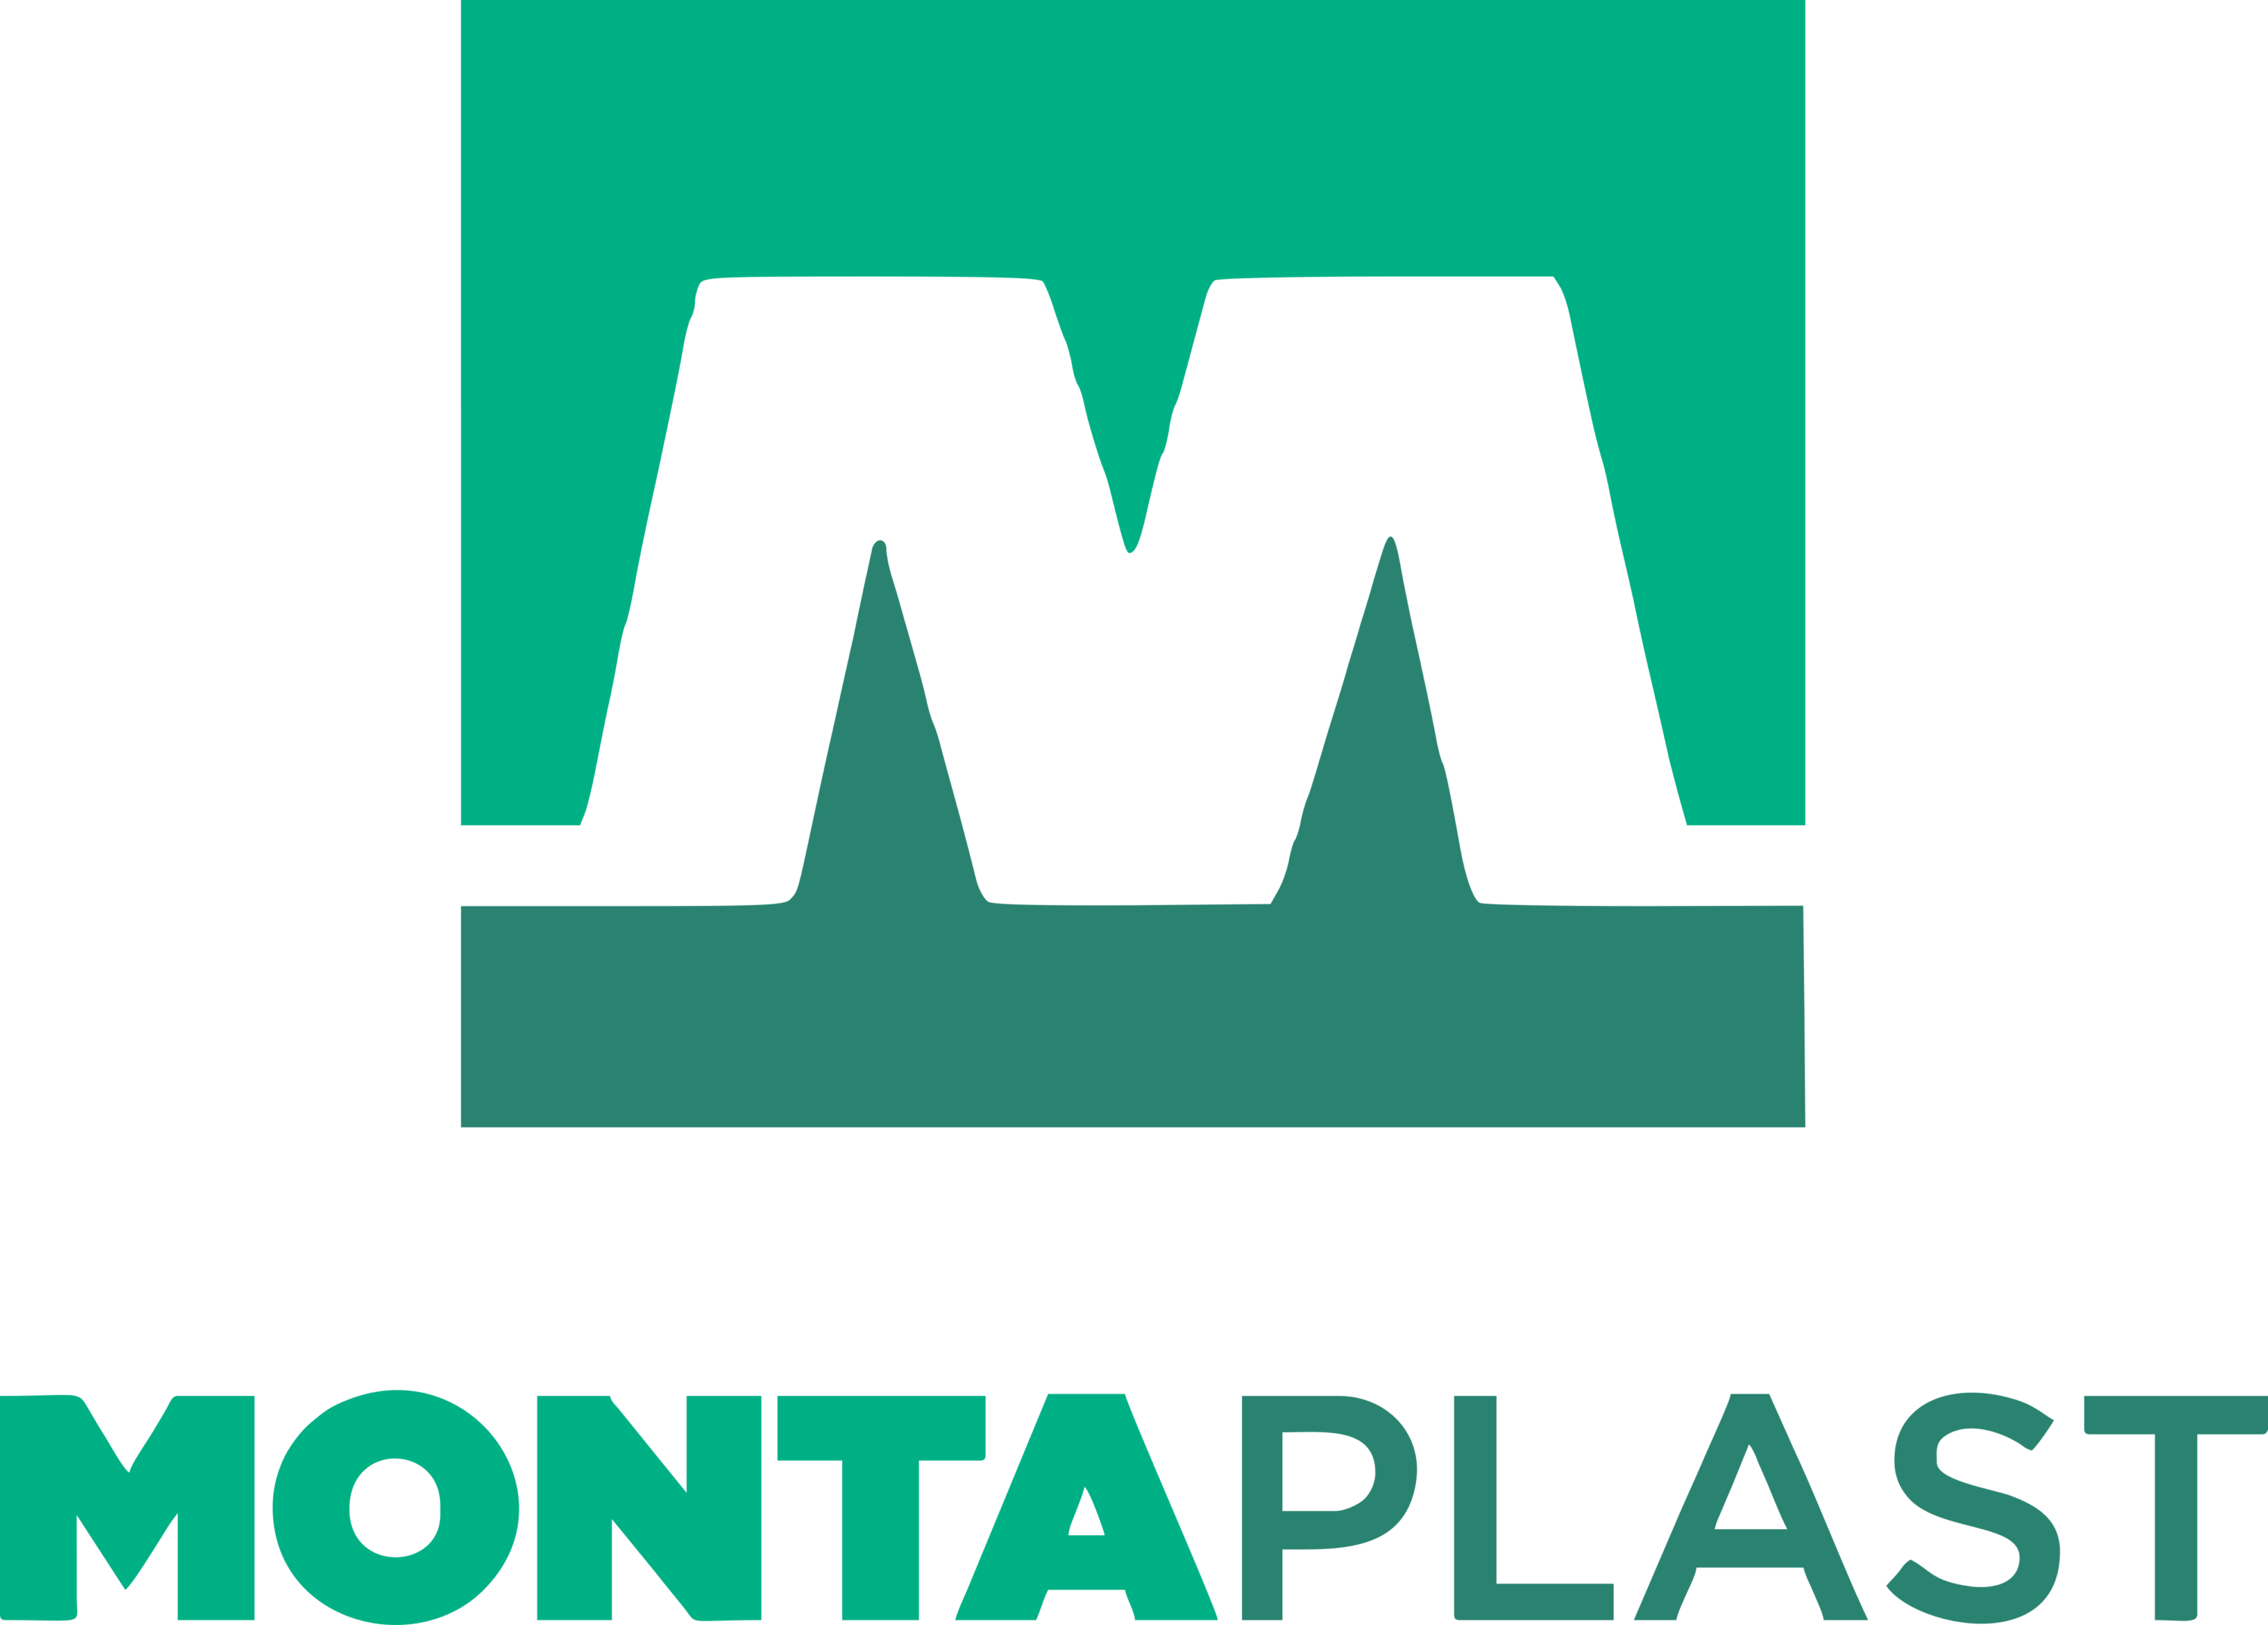 Monta Plast Logo vertically